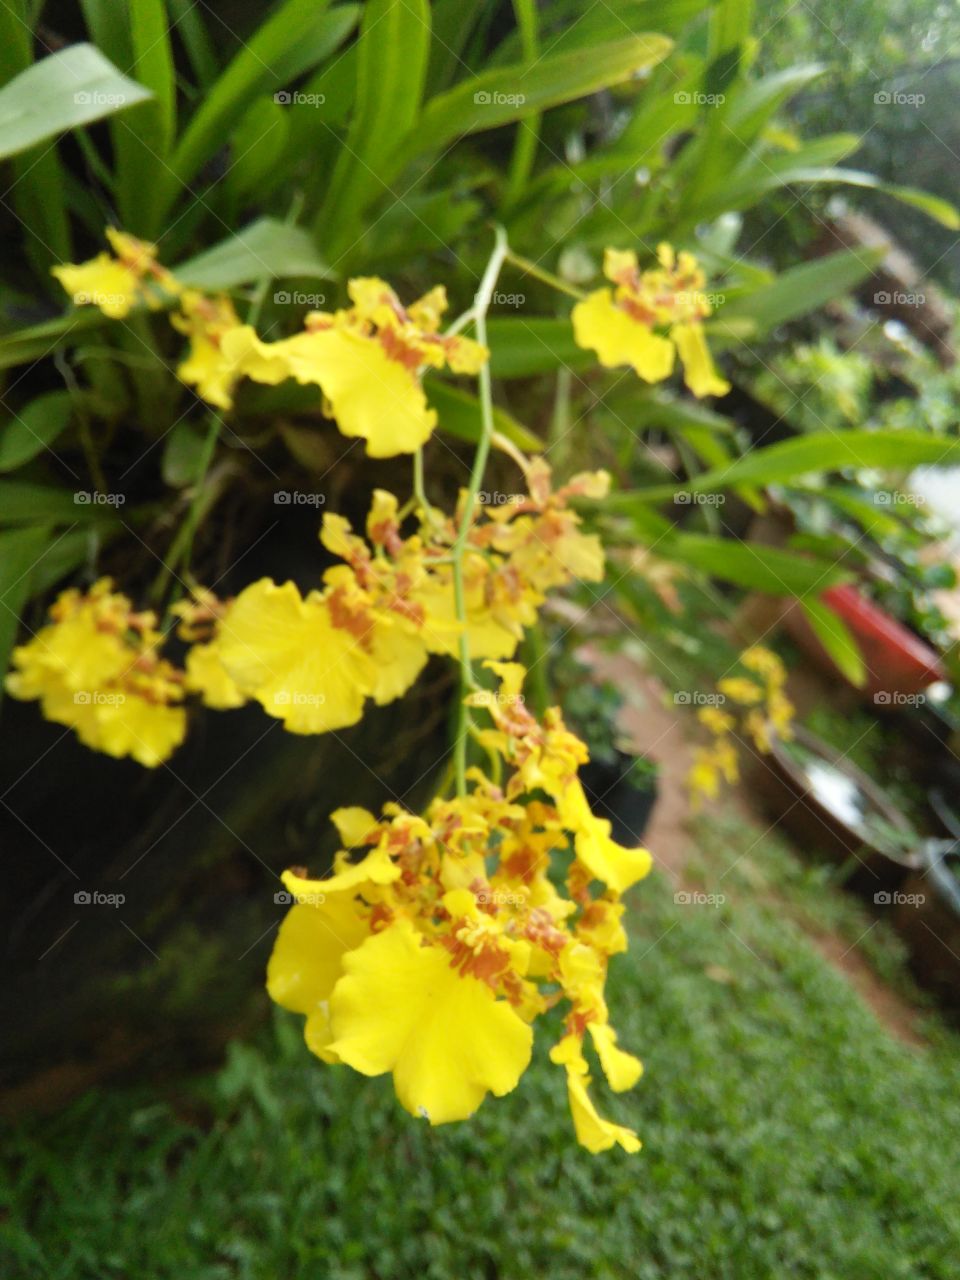 kandyan dance flower of sri lankan natural photos